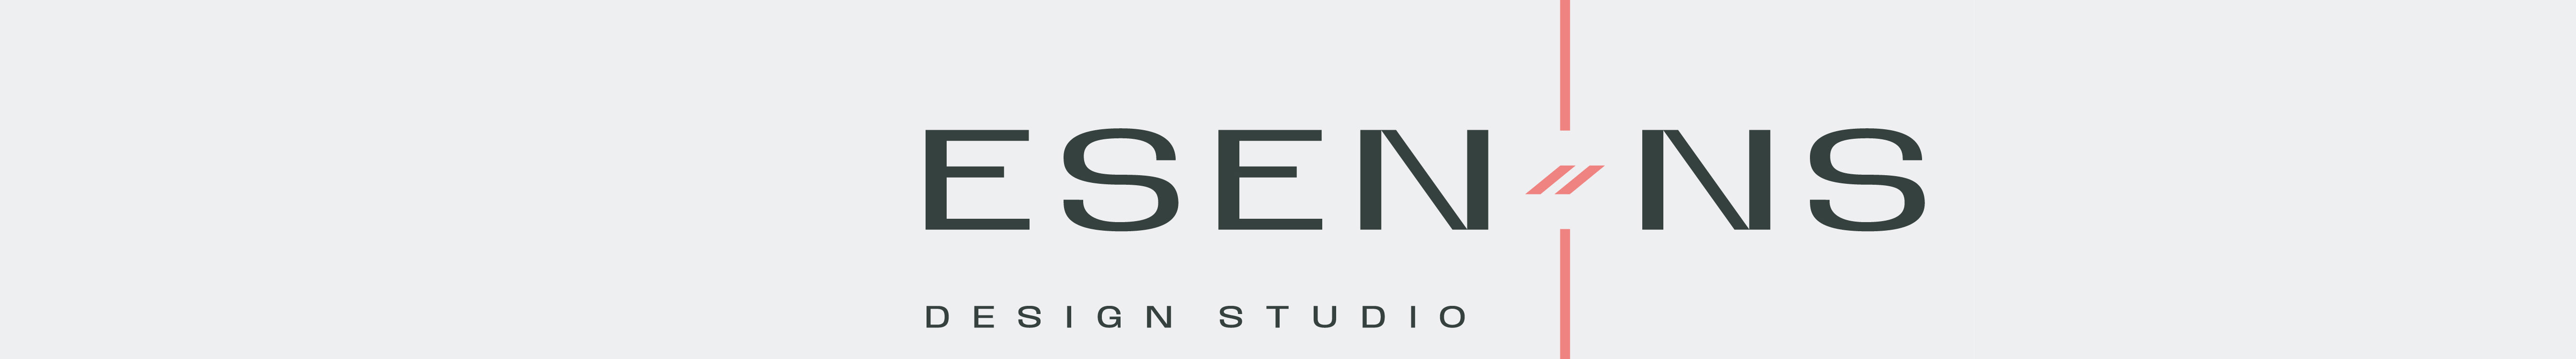 Banner de perfil de ESENINS design studio